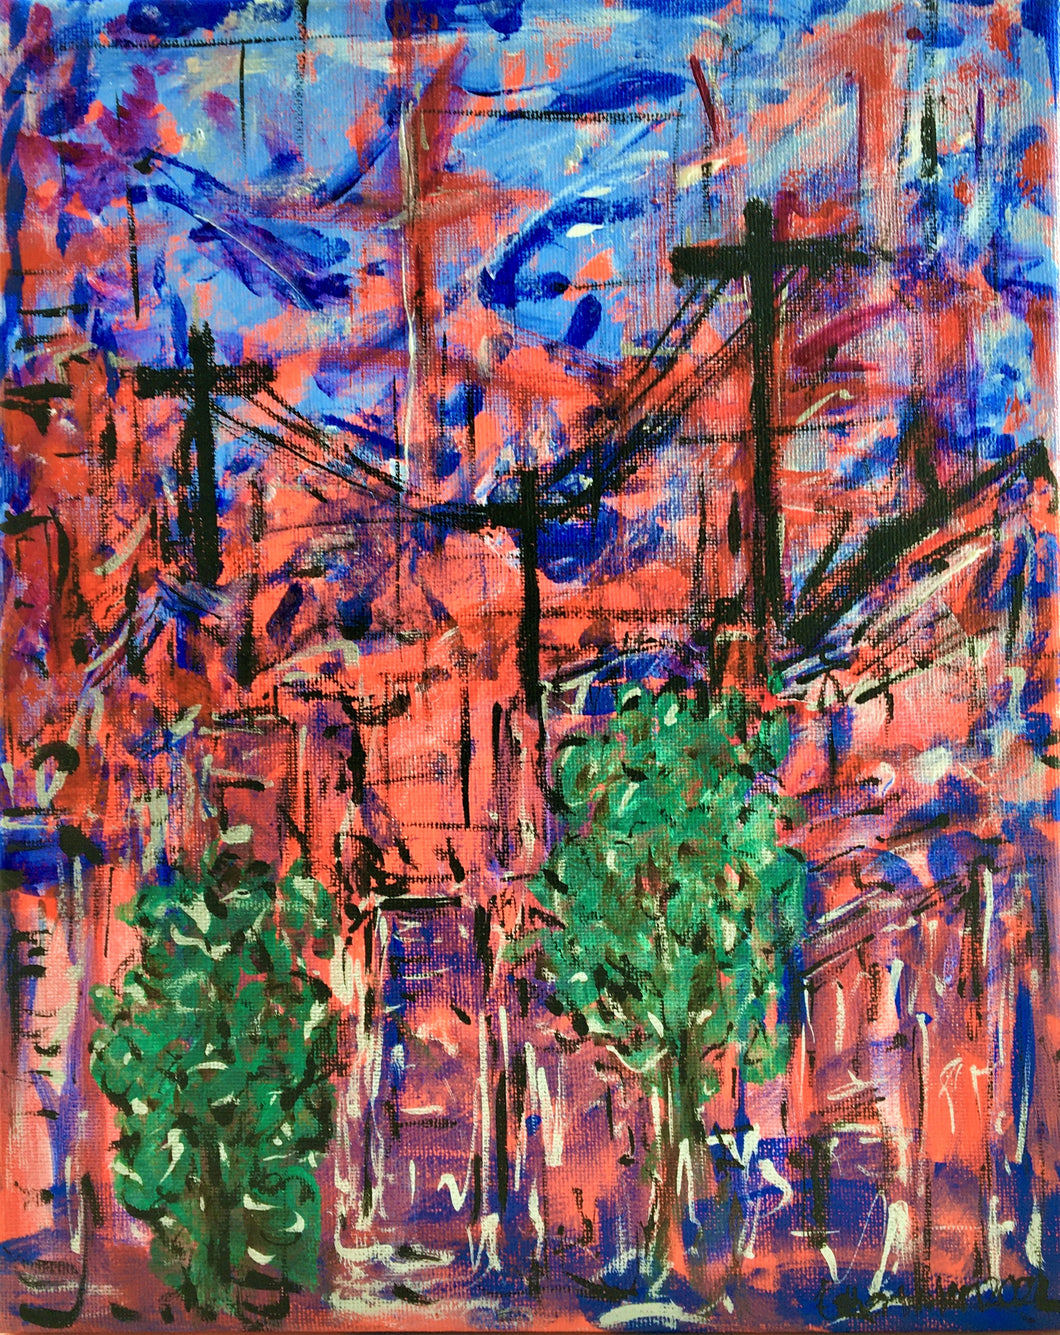 Abstract Urban Landscape Sunset - original acrylic on canvas painting - eDgE dEsiGn London